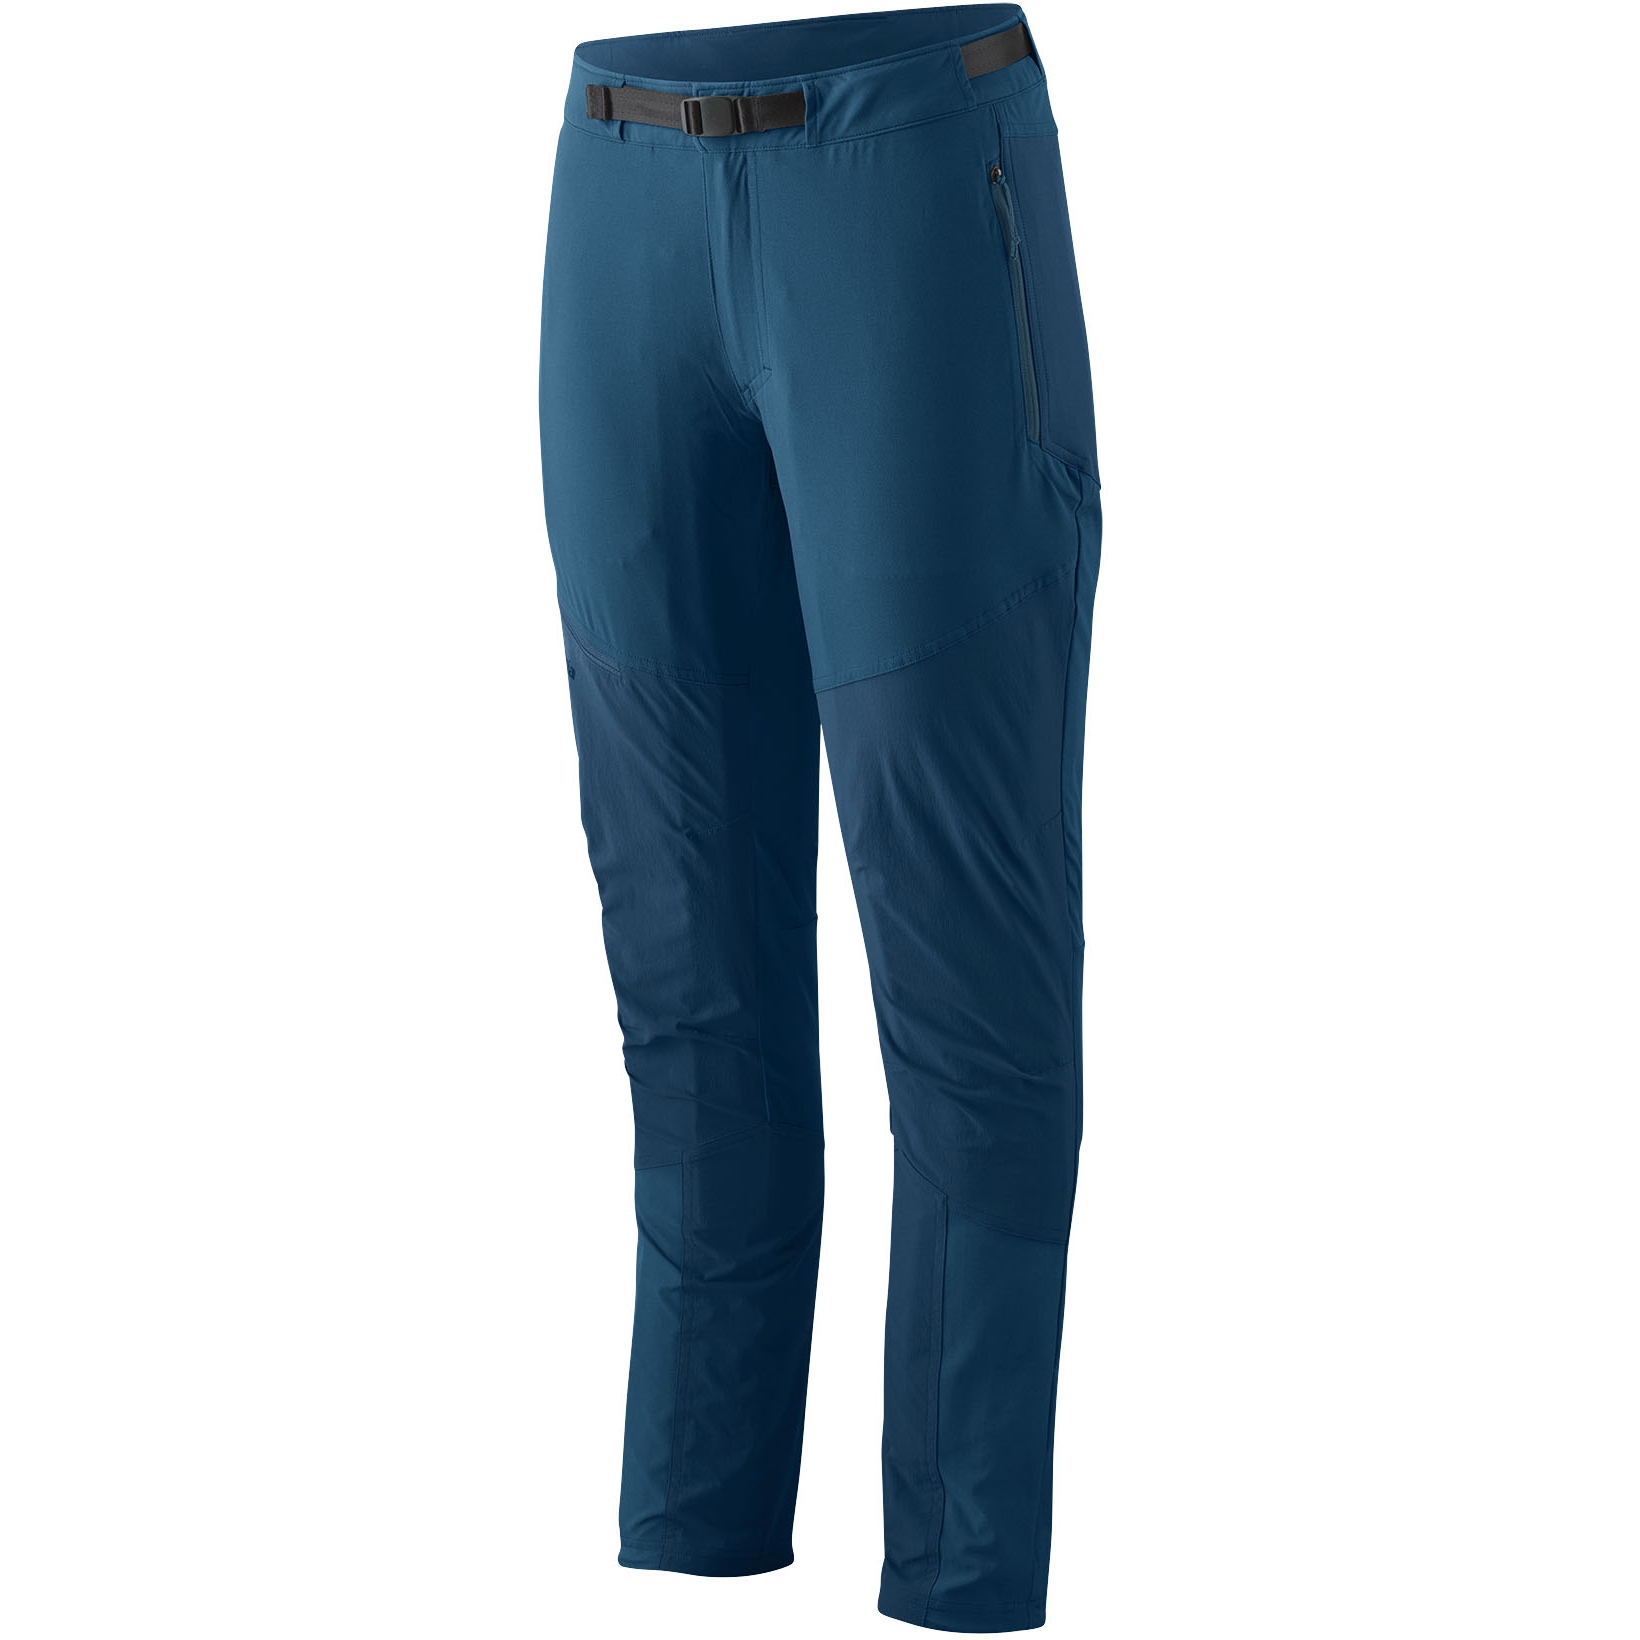 Patagonia Women's Altvia Alpine Pants - Regular - Lagom Blue | BIKE24